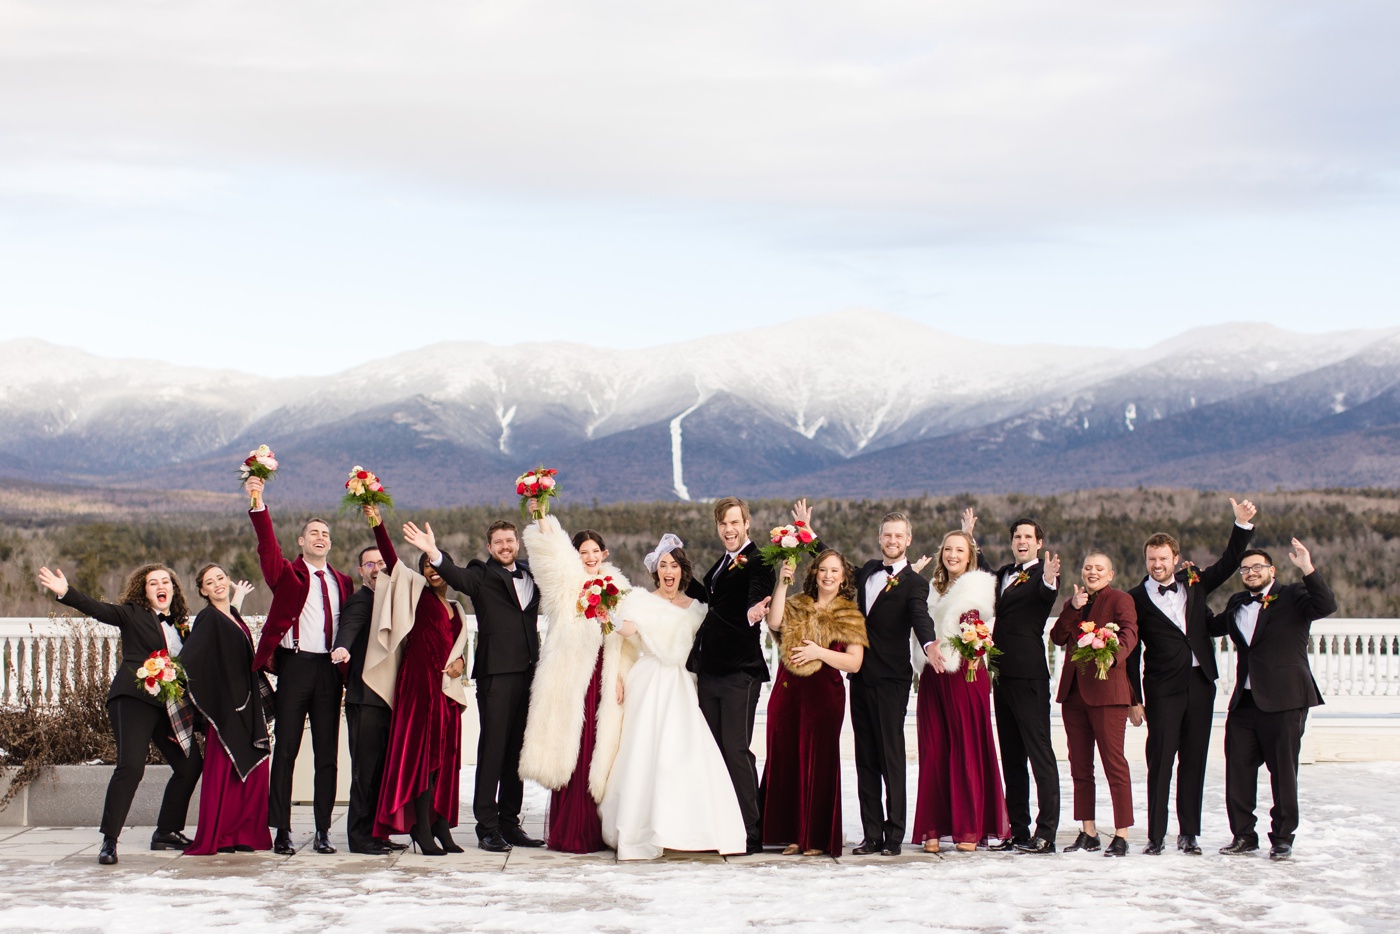 Bridal party portraits at Omni Mount Washington